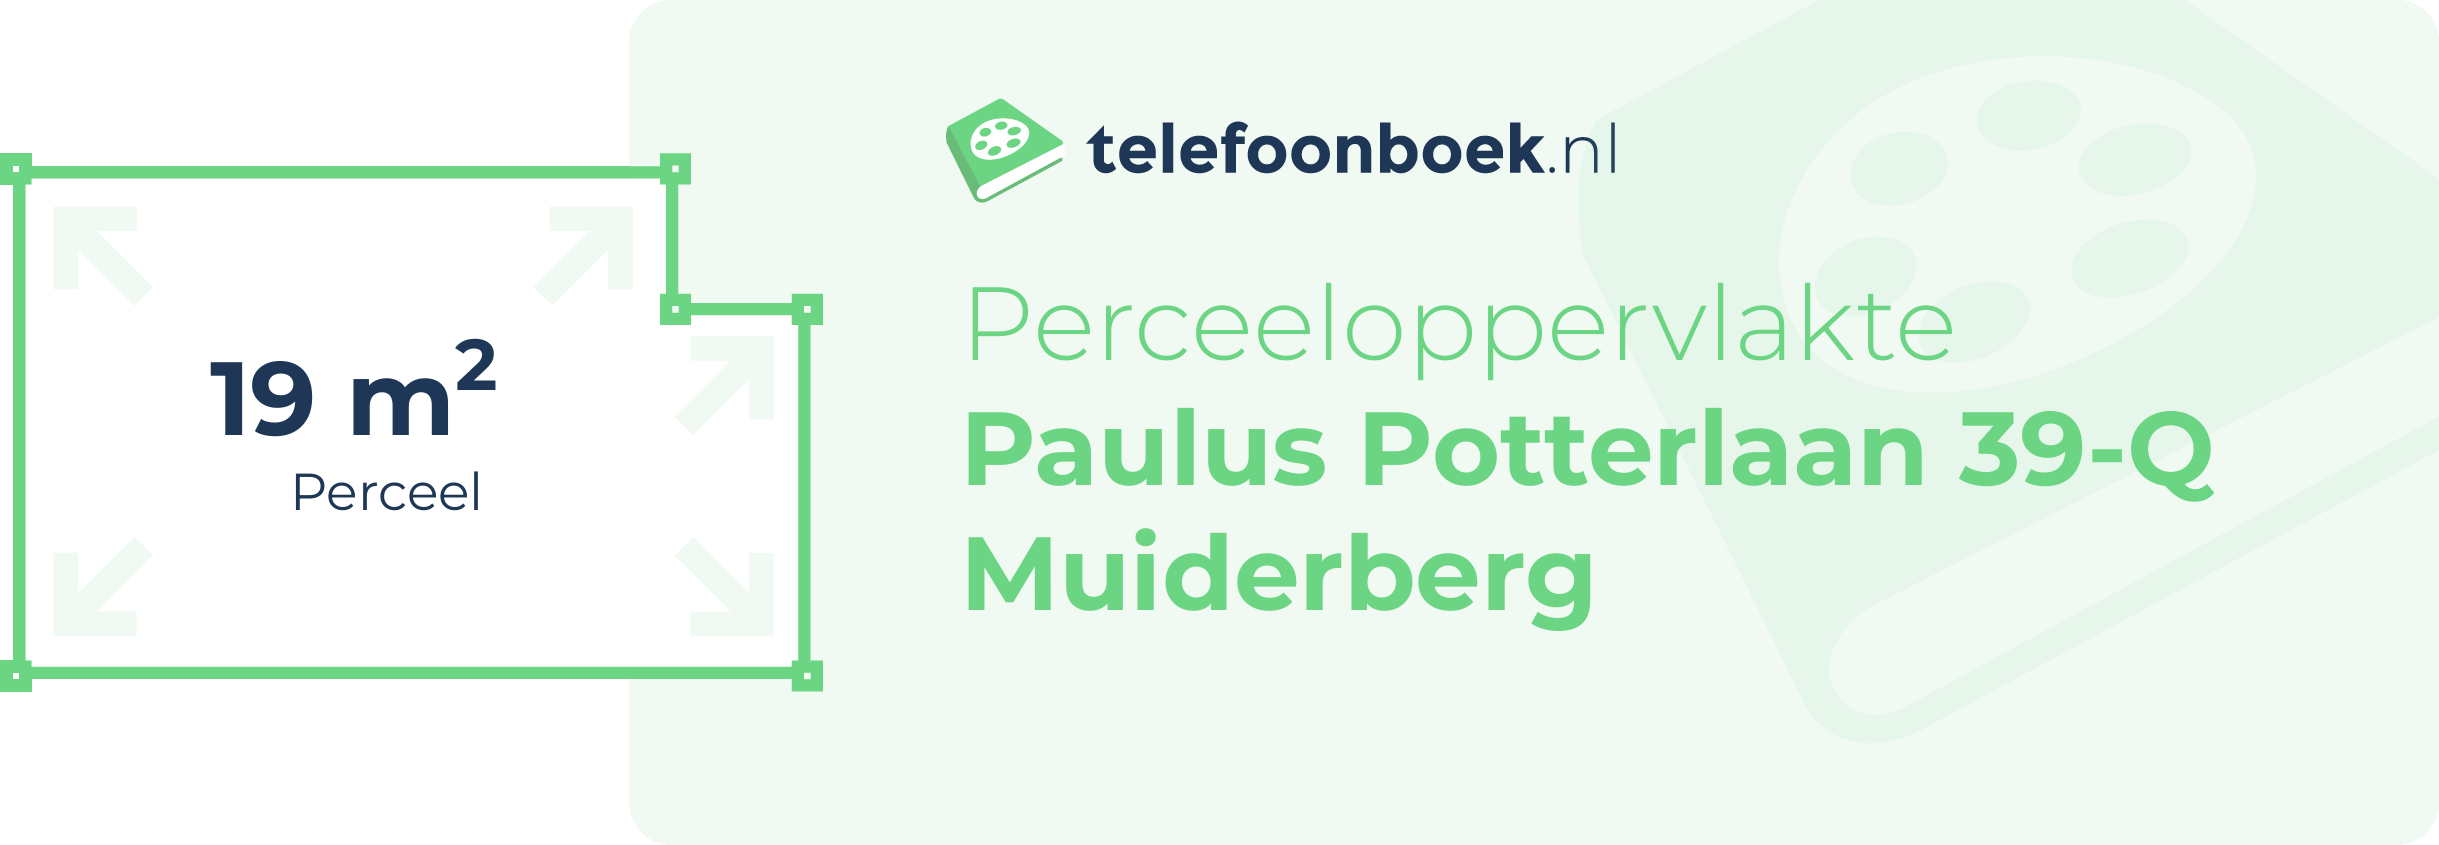 Perceeloppervlakte Paulus Potterlaan 39-Q Muiderberg